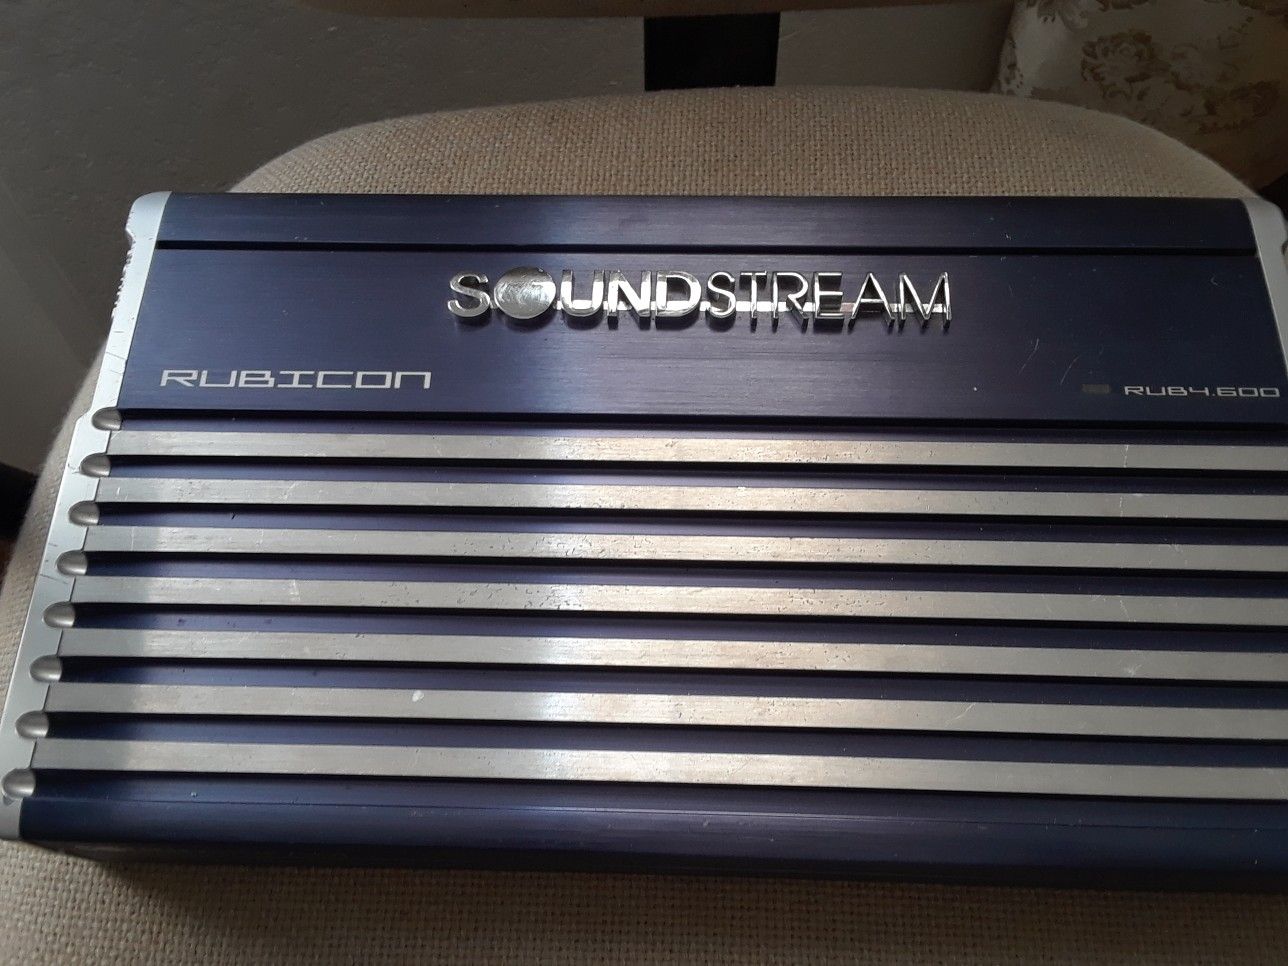 Soundstream amp. Must pick up in Oakcliff.